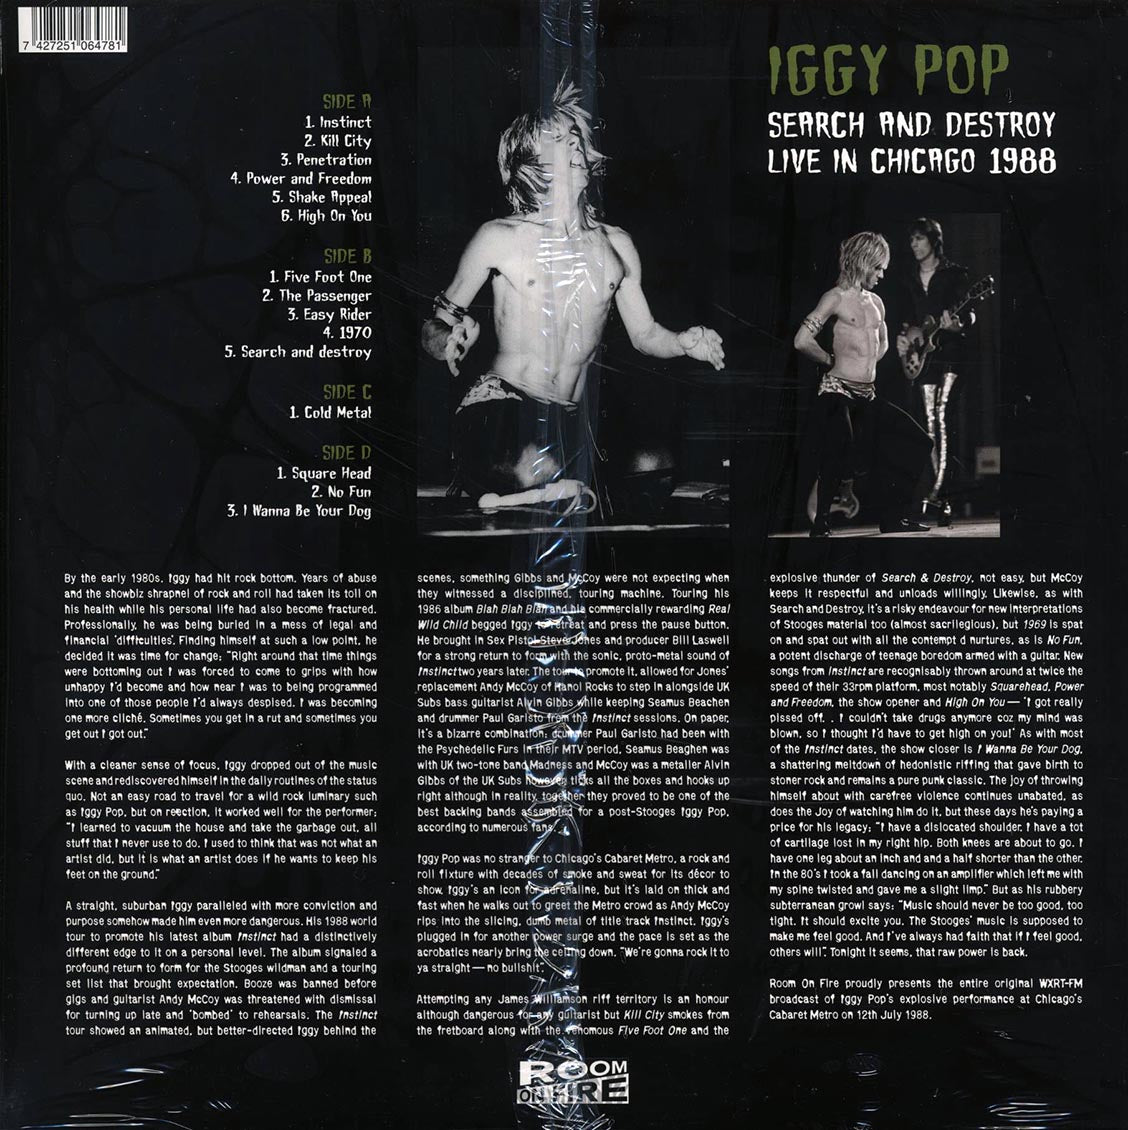 Iggy Pop - Search And Destroy: Live In Chicago 1988 (2xLP) - Vinyl LP, LP